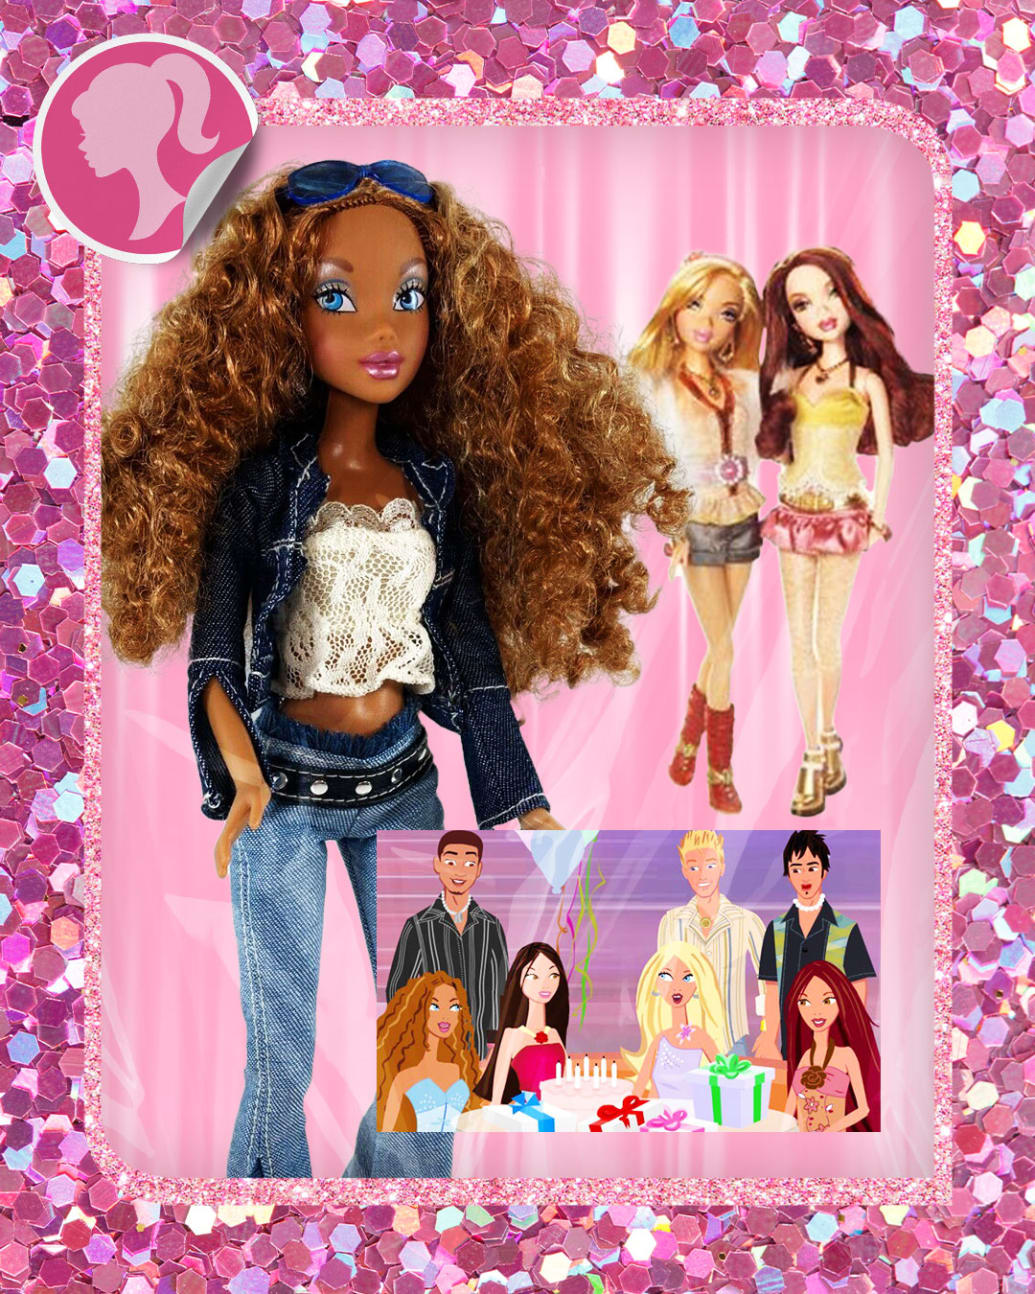 What Do Bratz Fans Think of the 'Barbie' Movie?